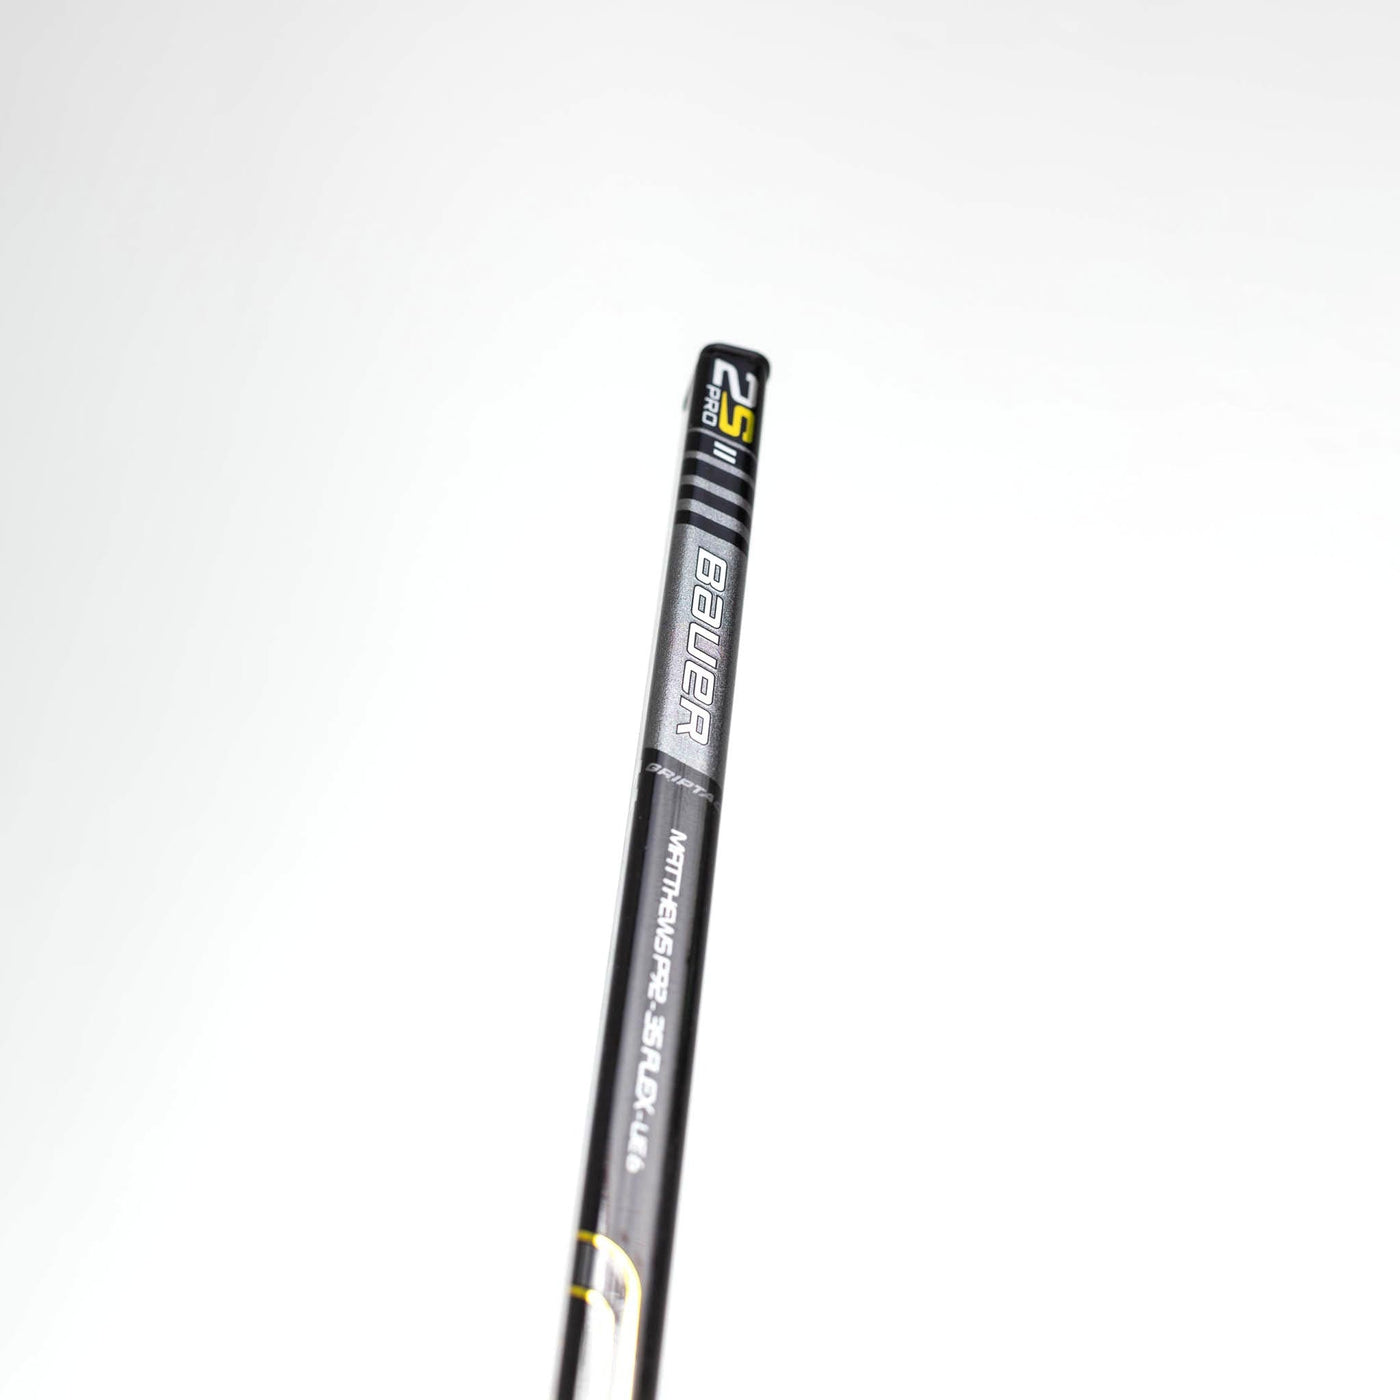 Bauer Supreme 2S Pro Youth Hockey Stick